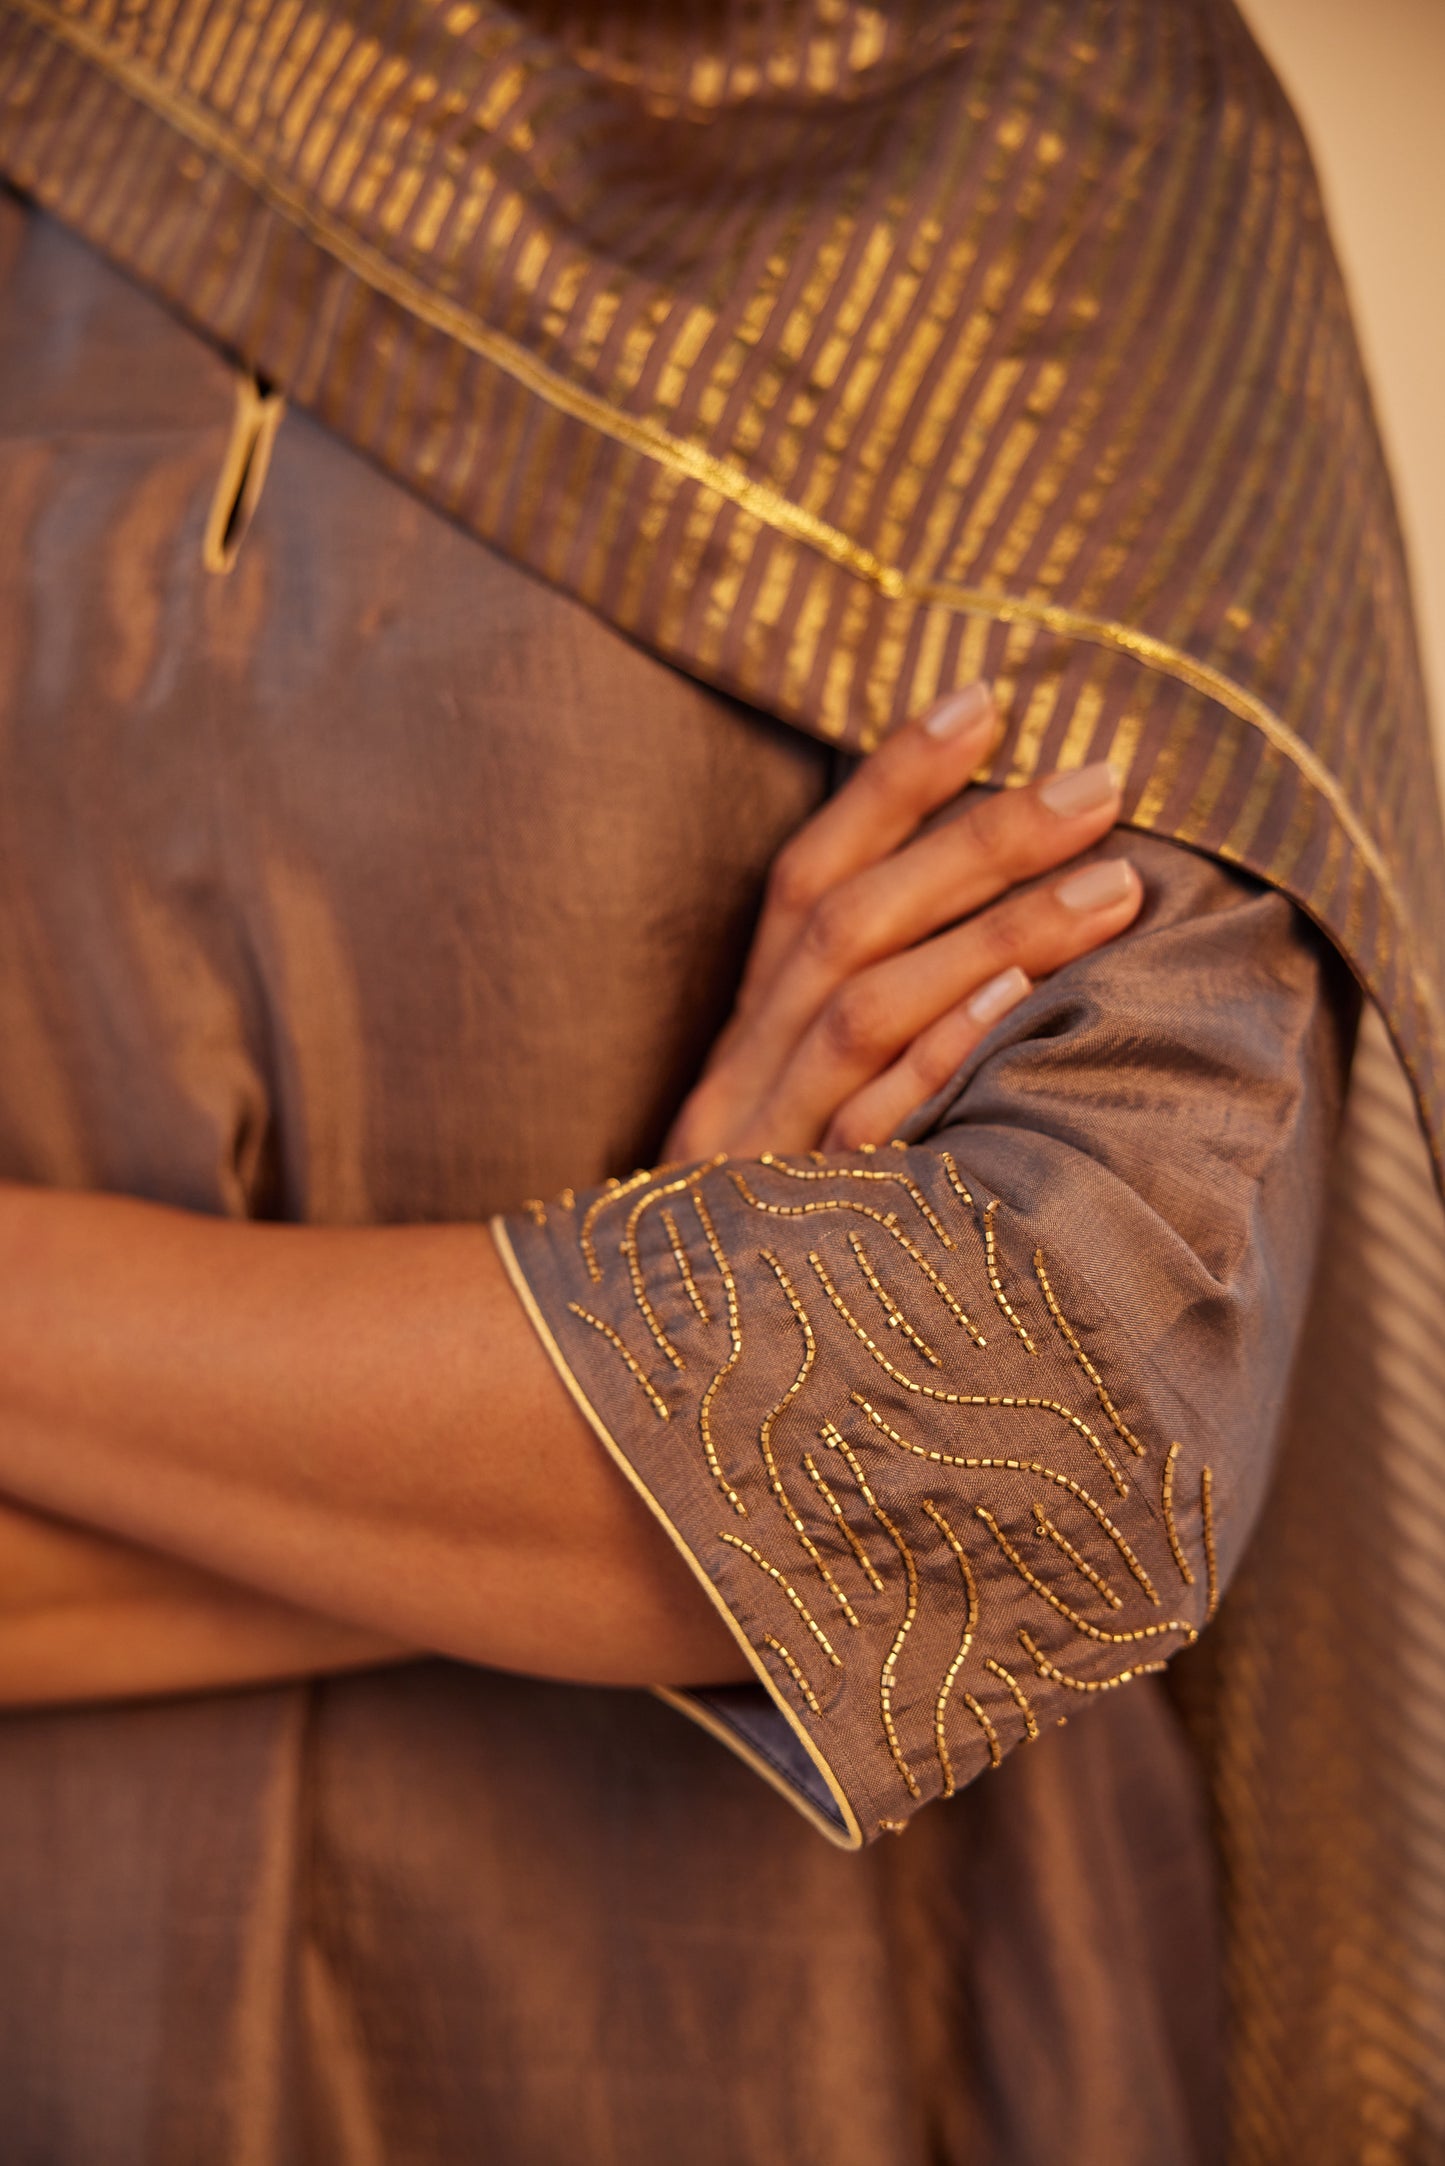 Jhabla Kurta in Grey Silk with Tissue Pant